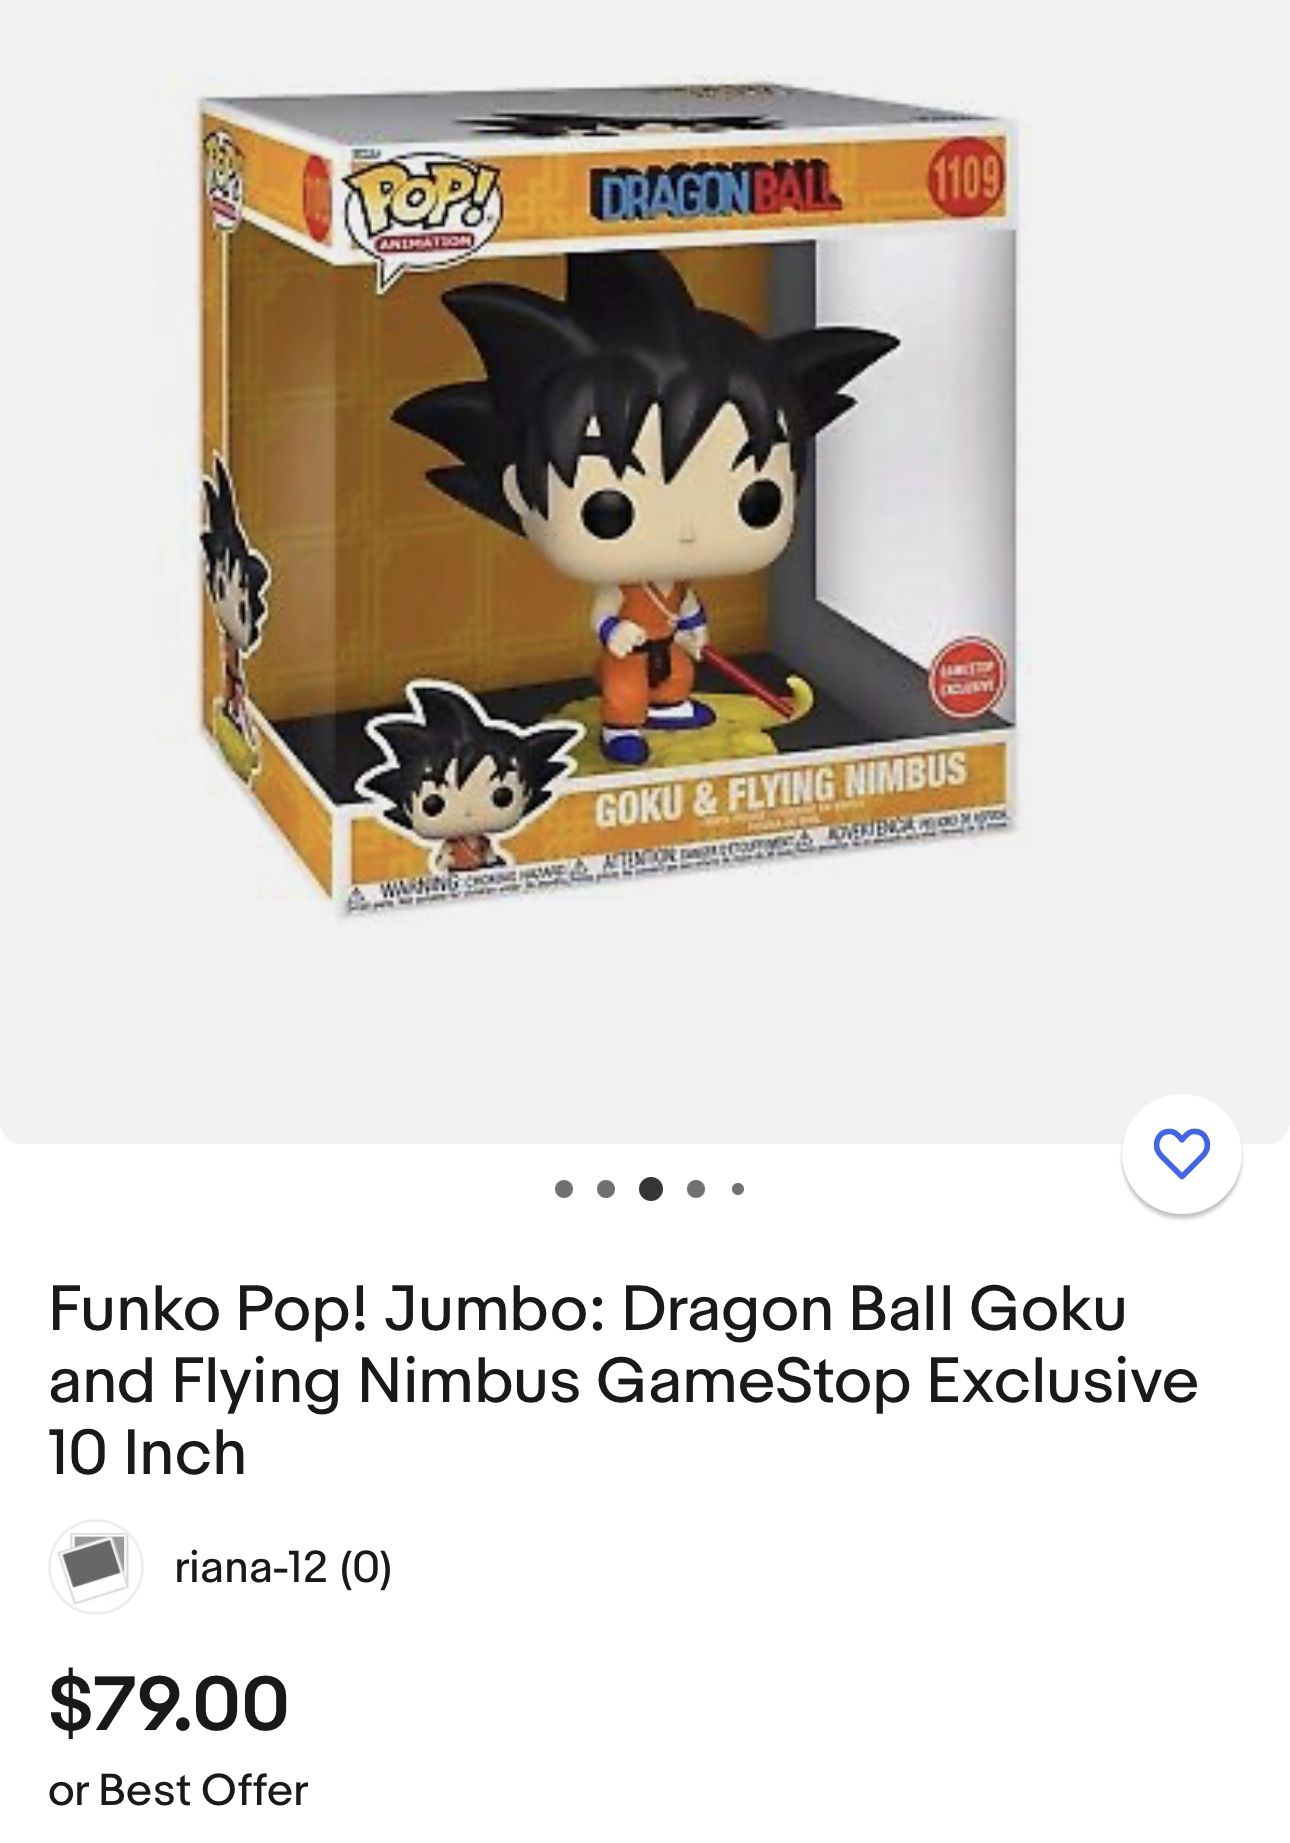 Funko Pop! Jumbo: Dragon Ball Goku and Flying Nimbus GameStop